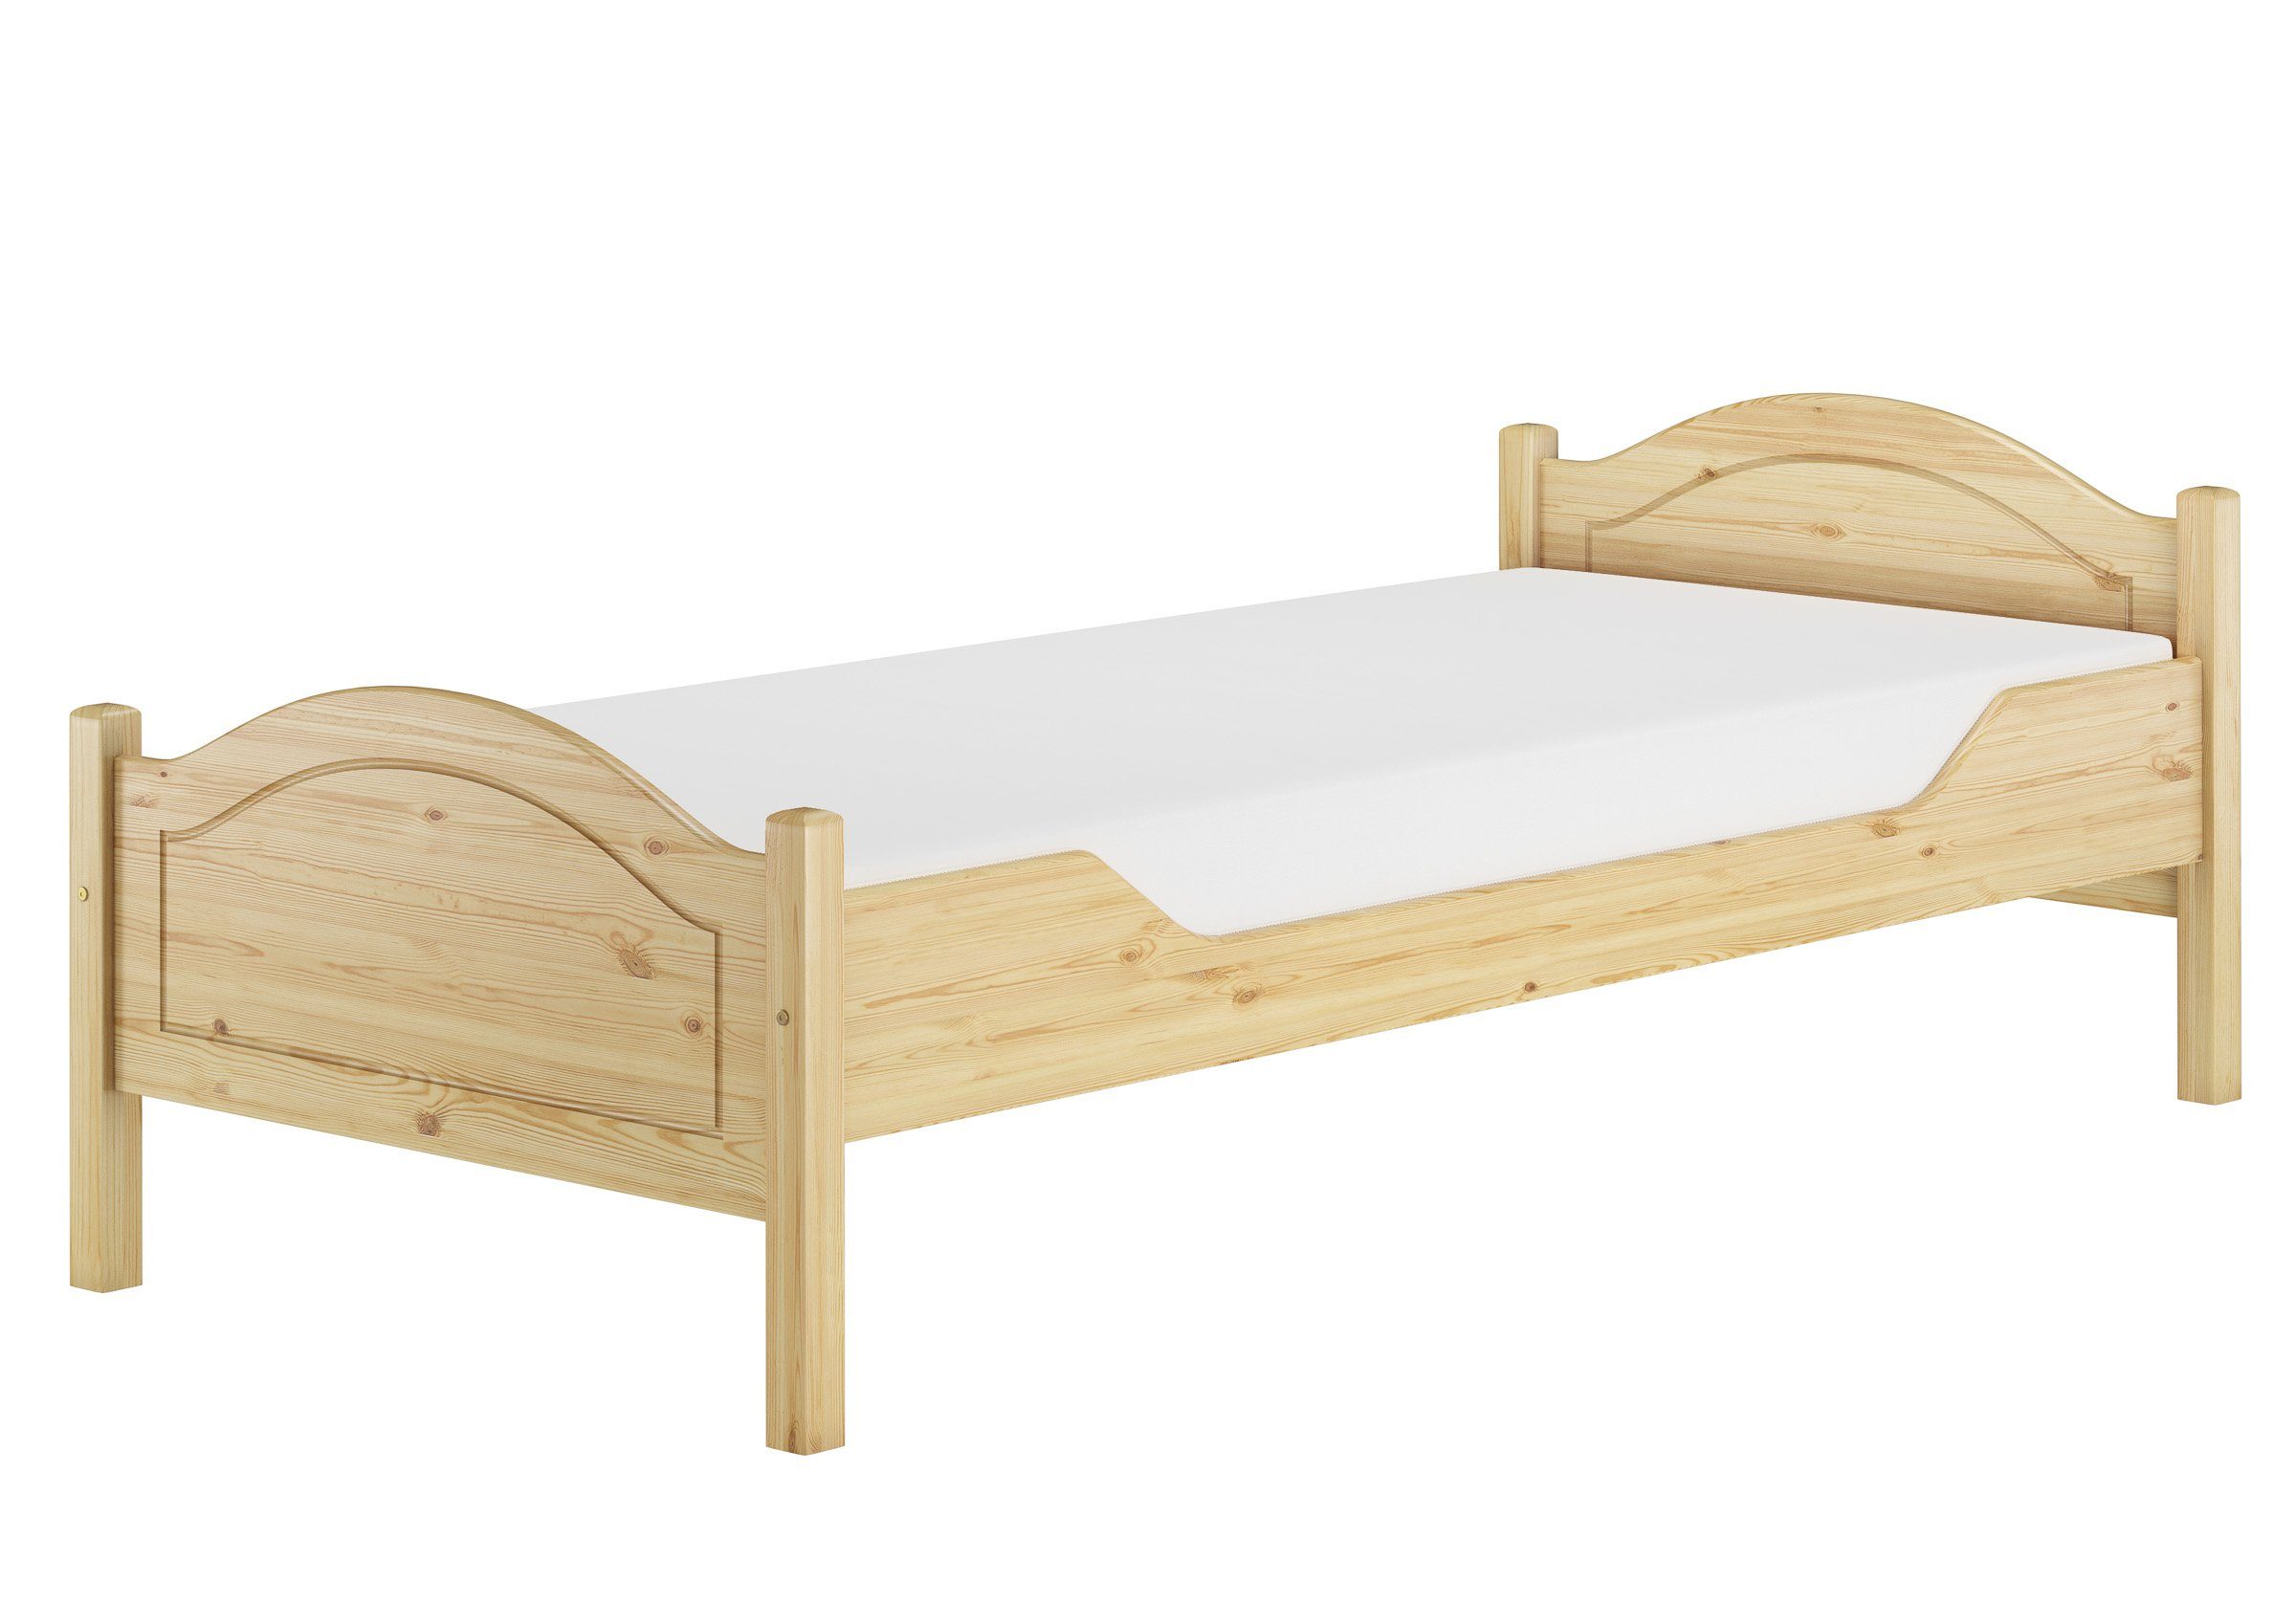 90x200, ERST-HOLZ Massivholz-Einzelbett Bett lackiert Kieferfarblos mit Kiefer Rollrost